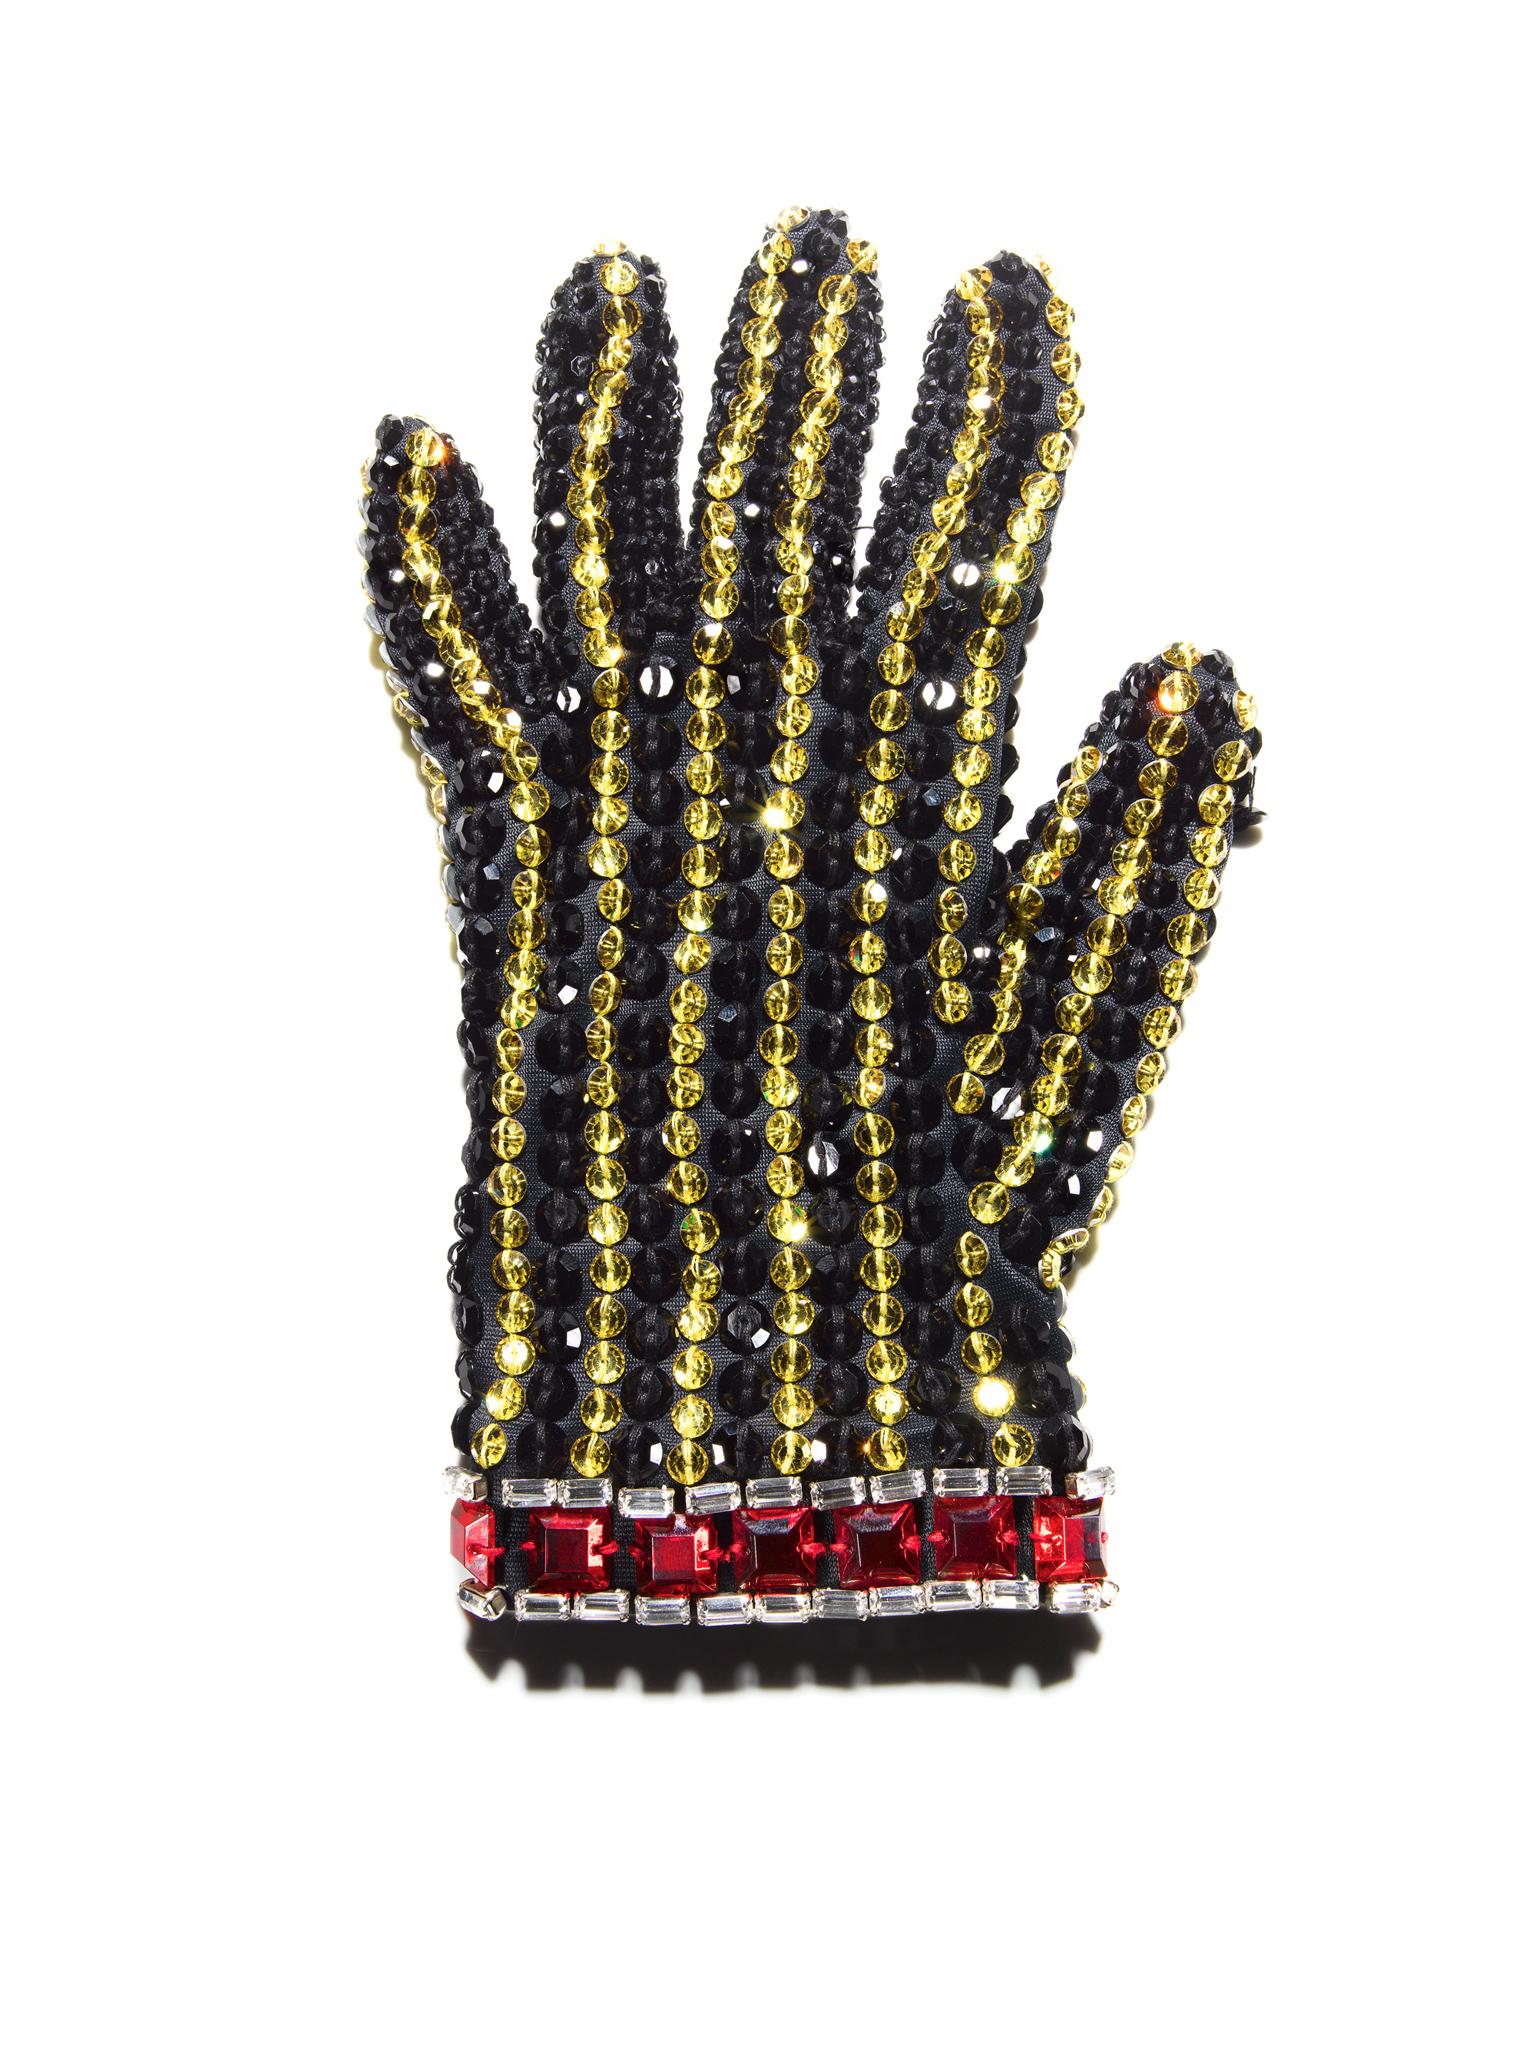 Black Glove ( Michael Jackson ) 40" x 30"